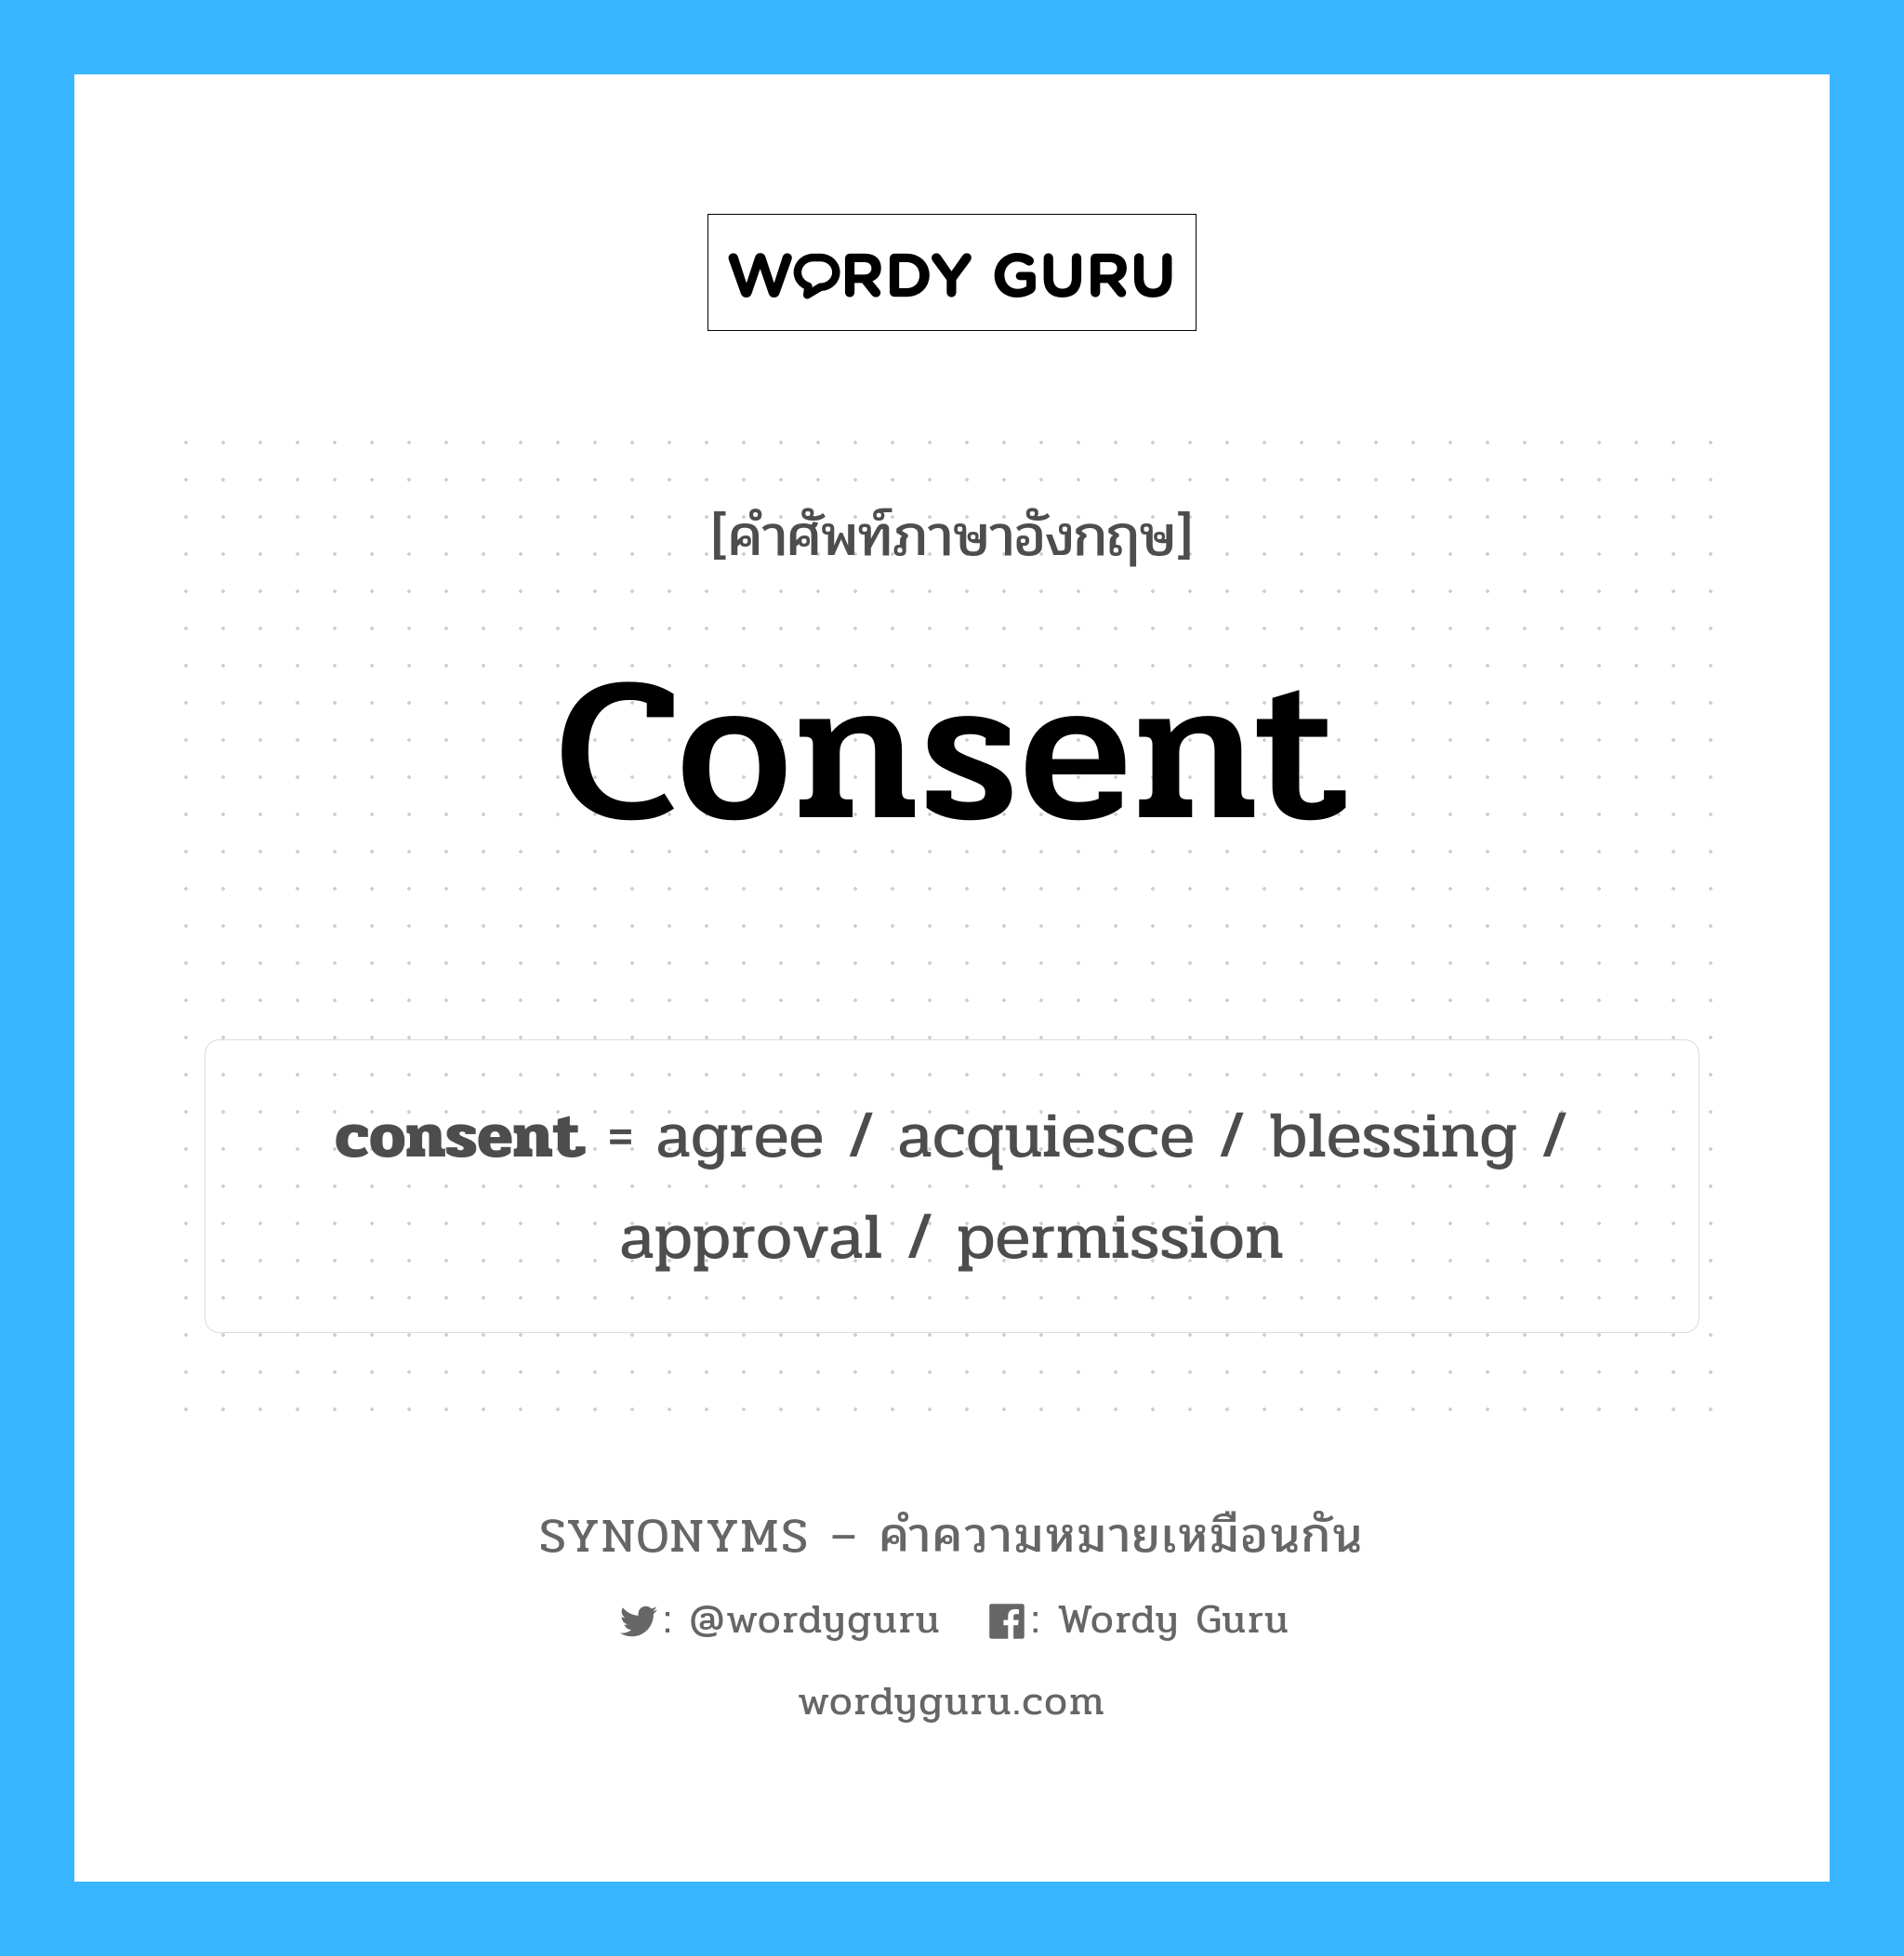 consent เป็นหนึ่งใน permission และมีคำอื่น ๆ อีกดังนี้, คำศัพท์ภาษาอังกฤษ consent ความหมายคล้ายกันกับ permission แปลว่า อนุญาต หมวด permission